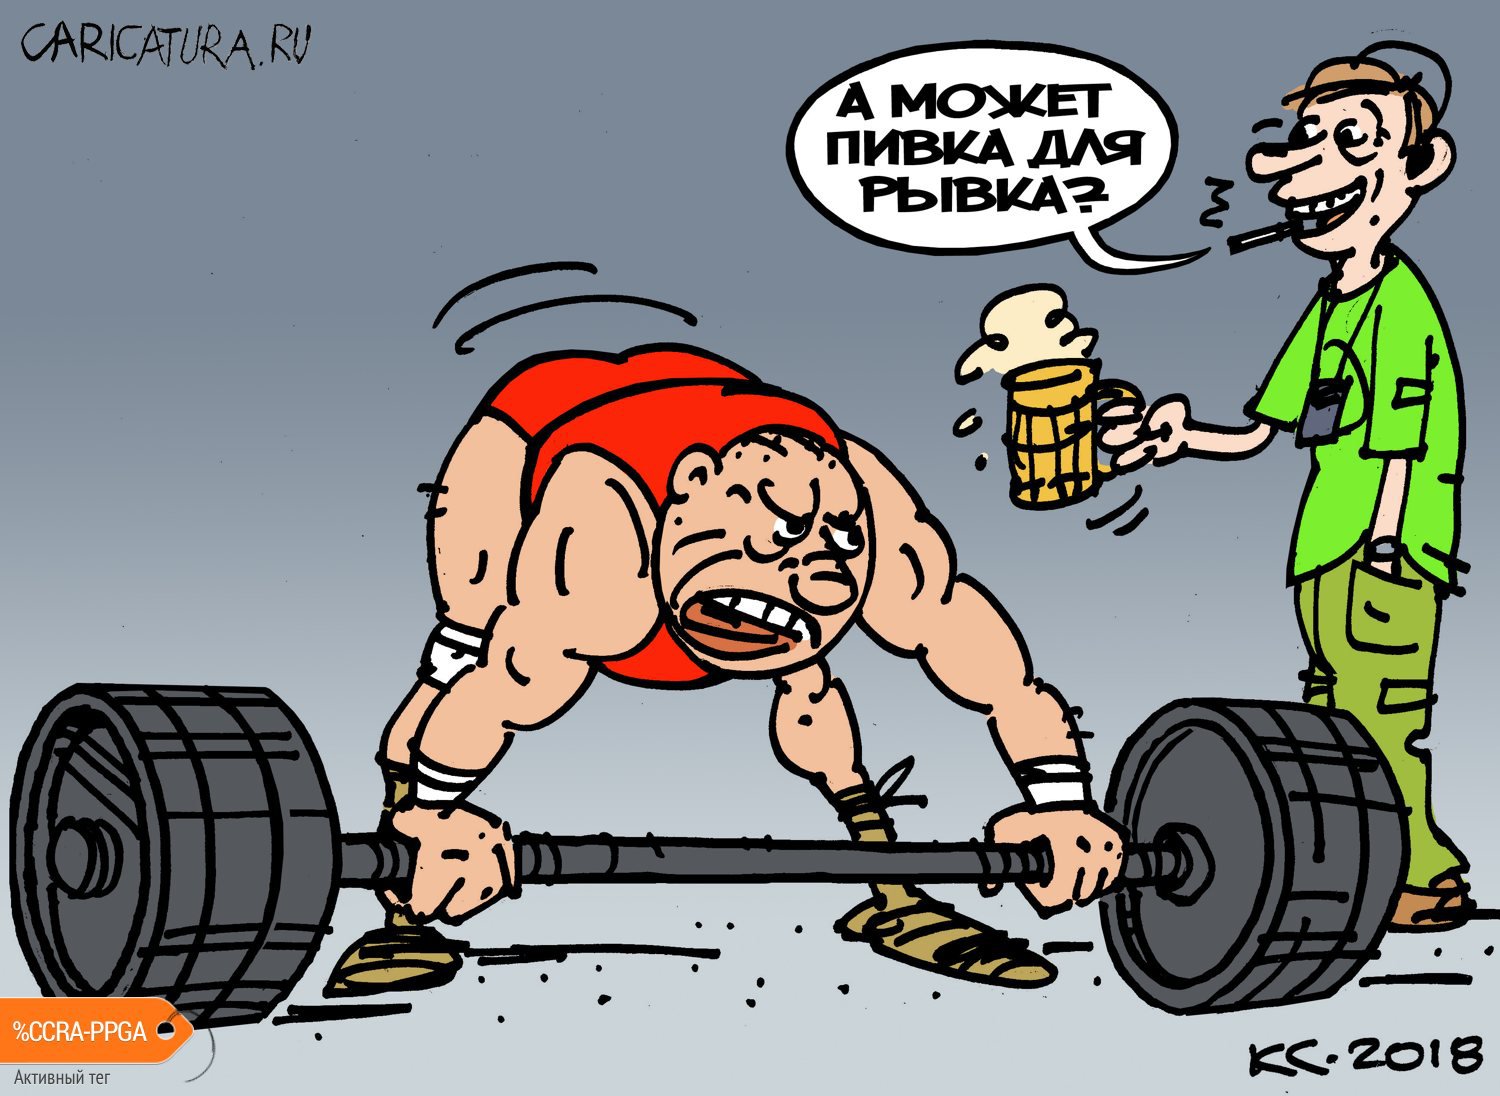 Карикатура "Допинг", Вячеслав Капрельянц